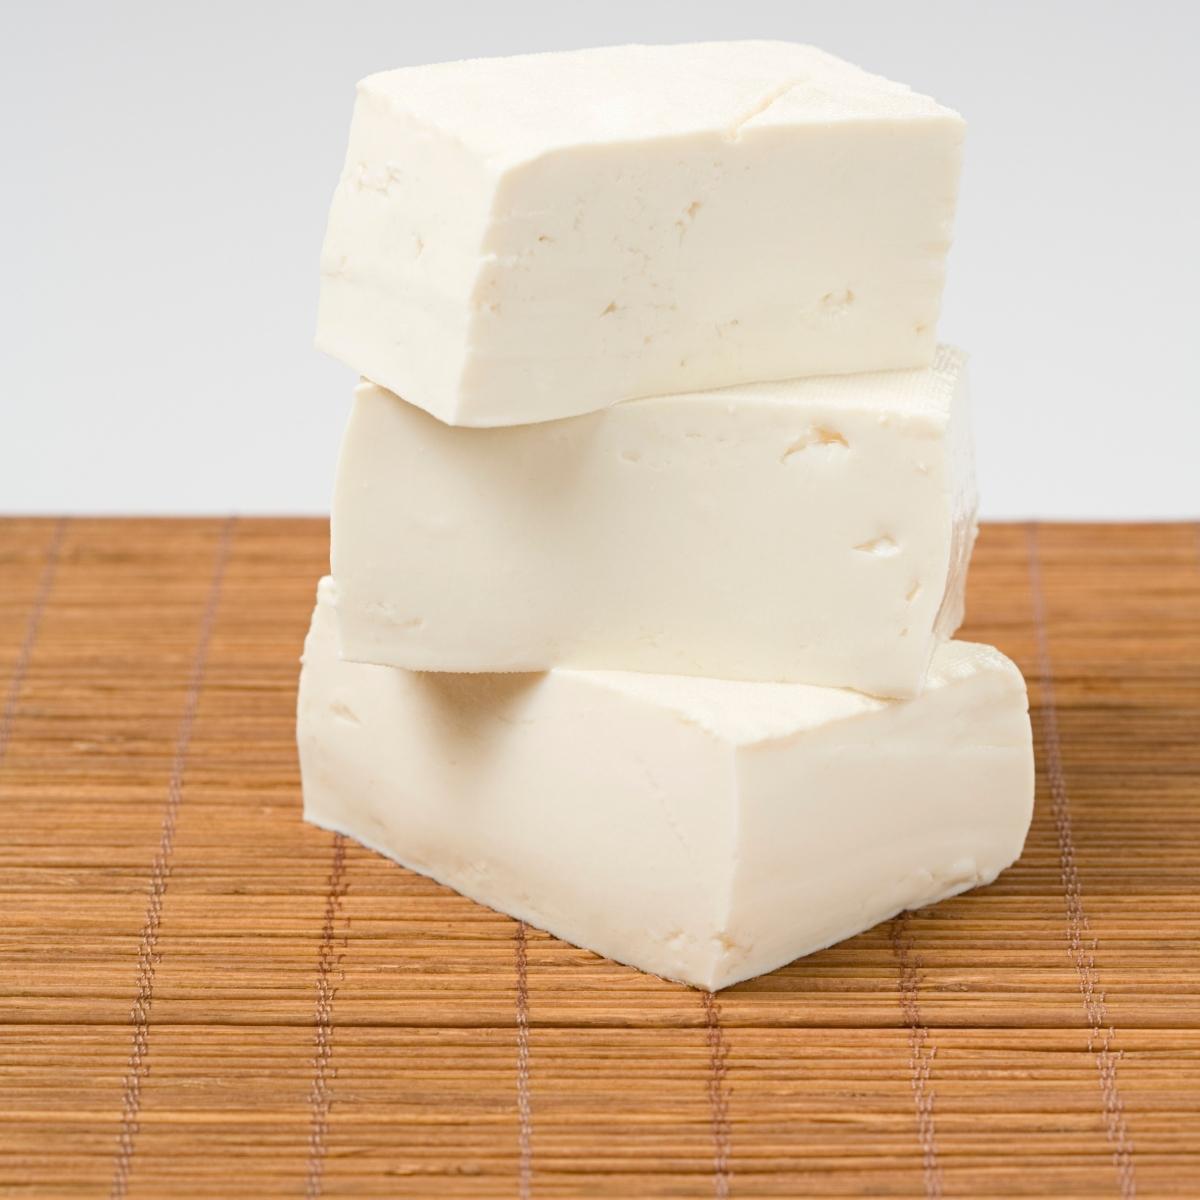 silken tofu as vegan egg alternative.